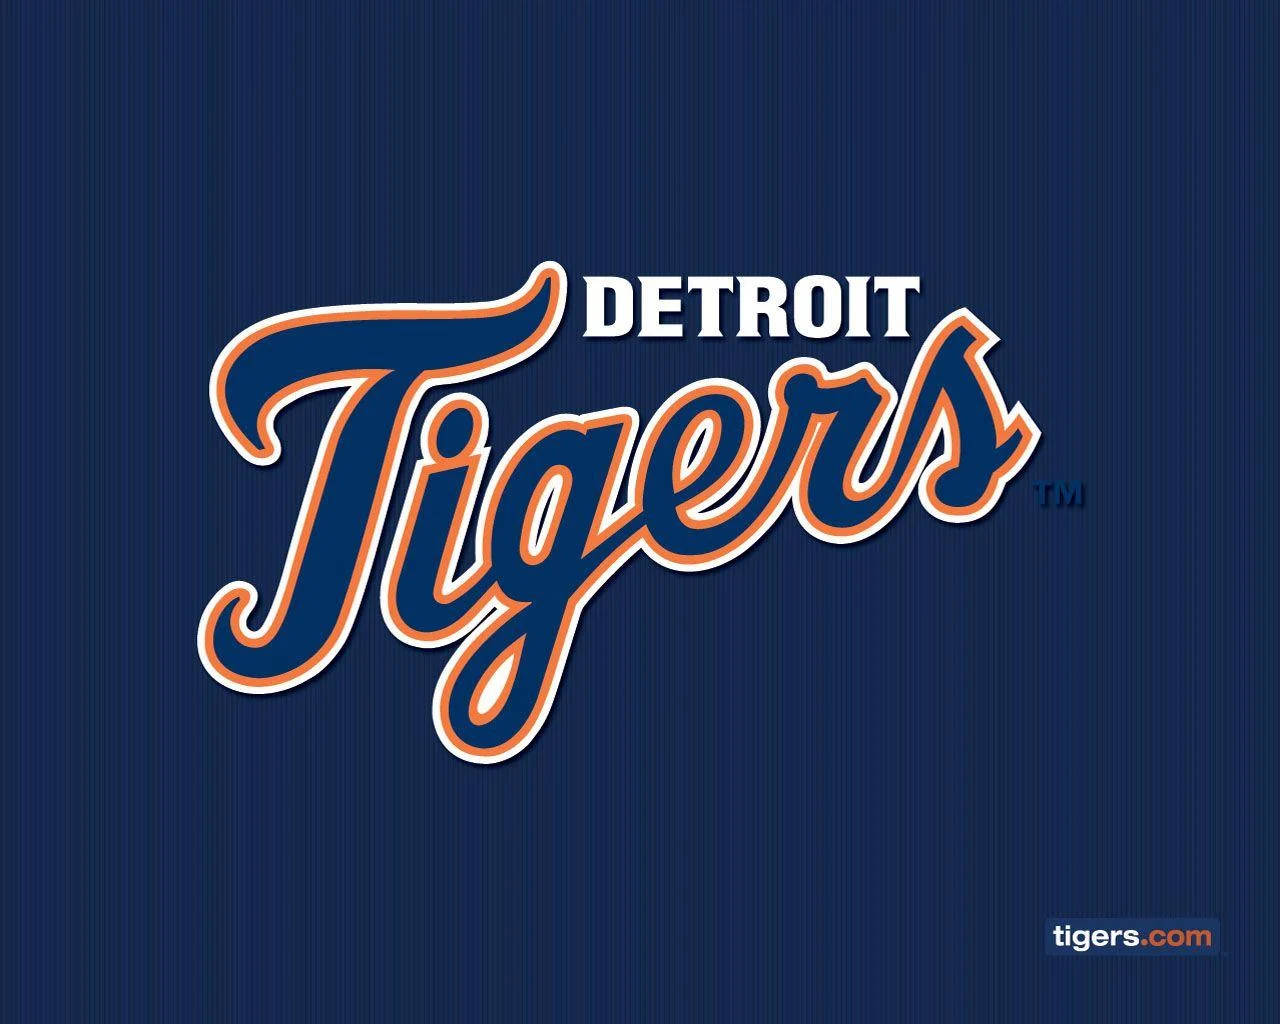 Detroit Tigers Baseball Team Banner Wallpaper